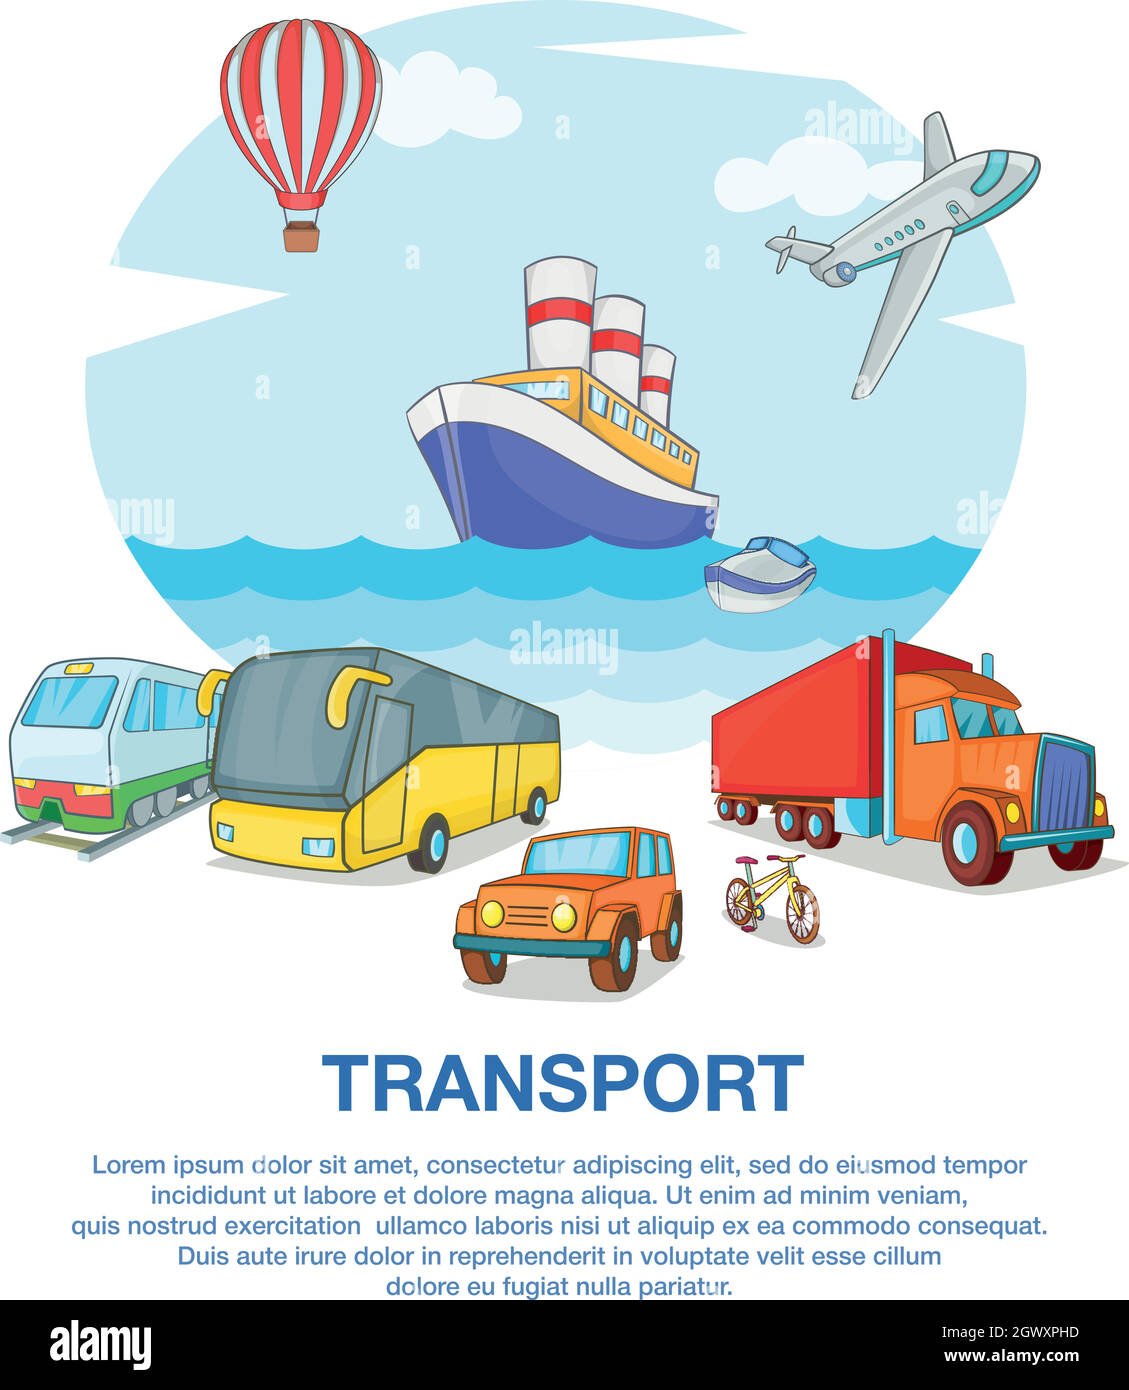 Transportation cartoon hi-res stock photography and images - Alamy